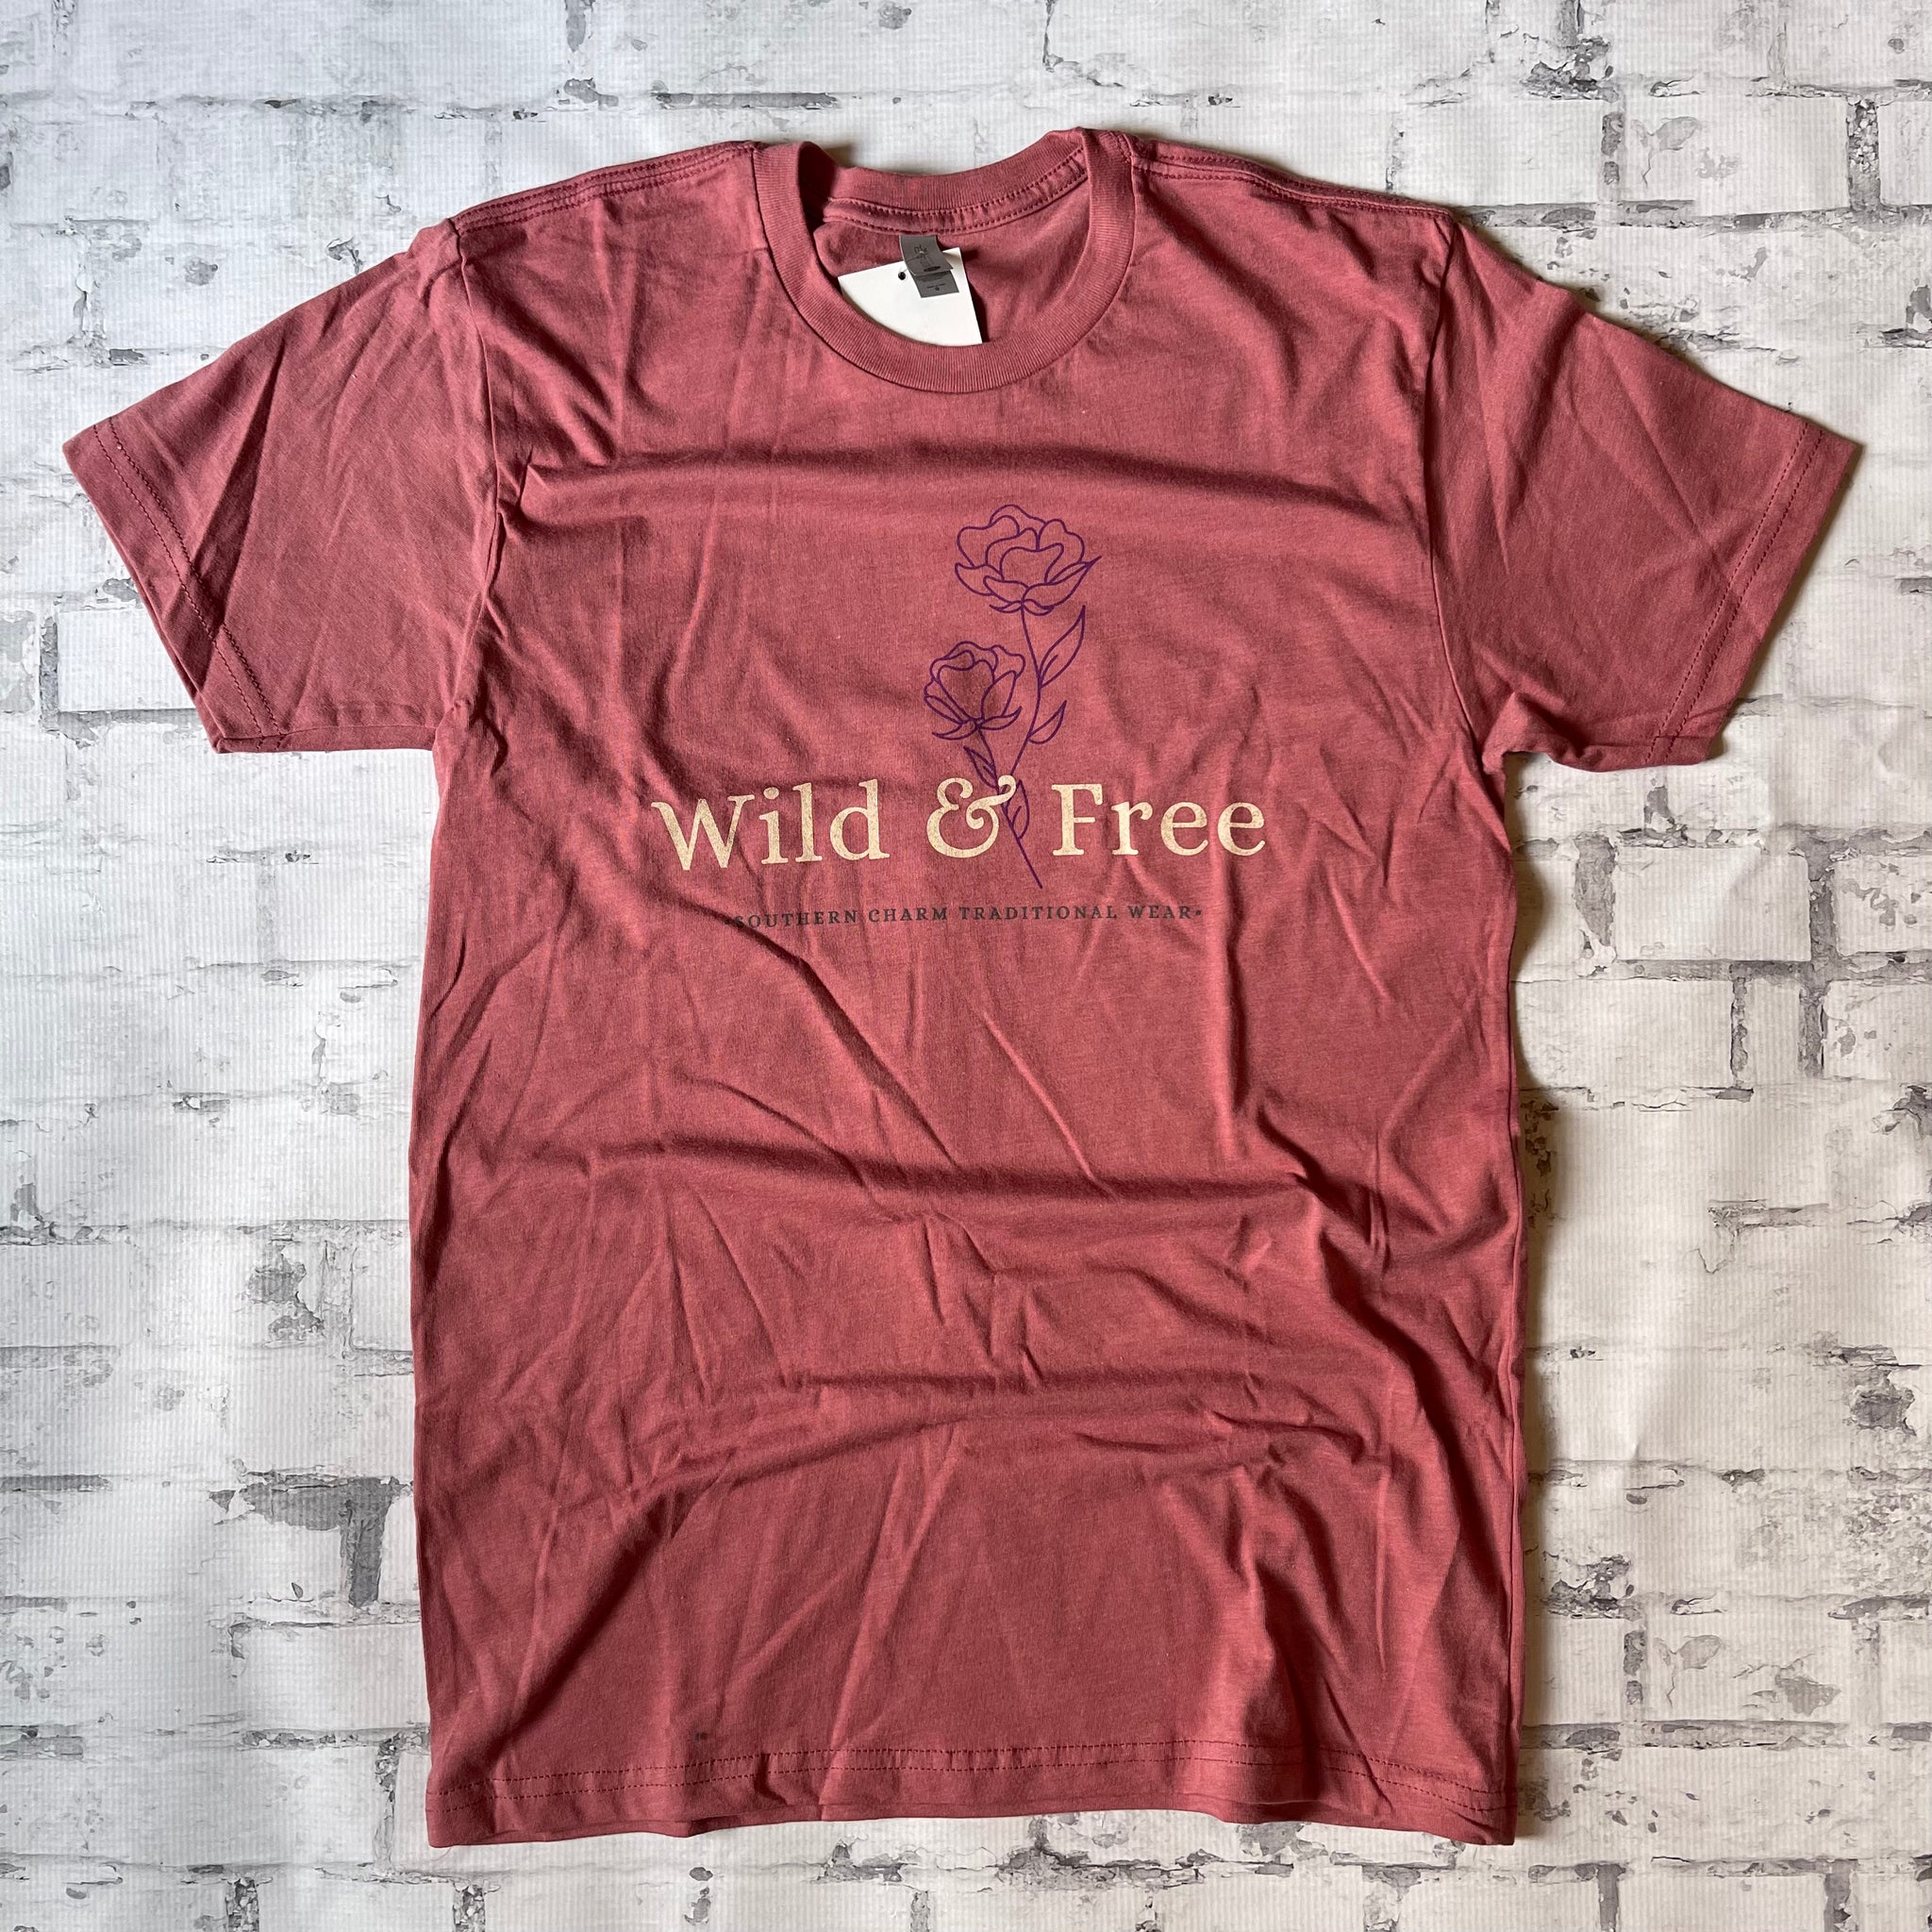 Southern Charm "Wild and Free" Short Sleeve T-shirt - Mauve - Southern Charm "Shop The Charm"